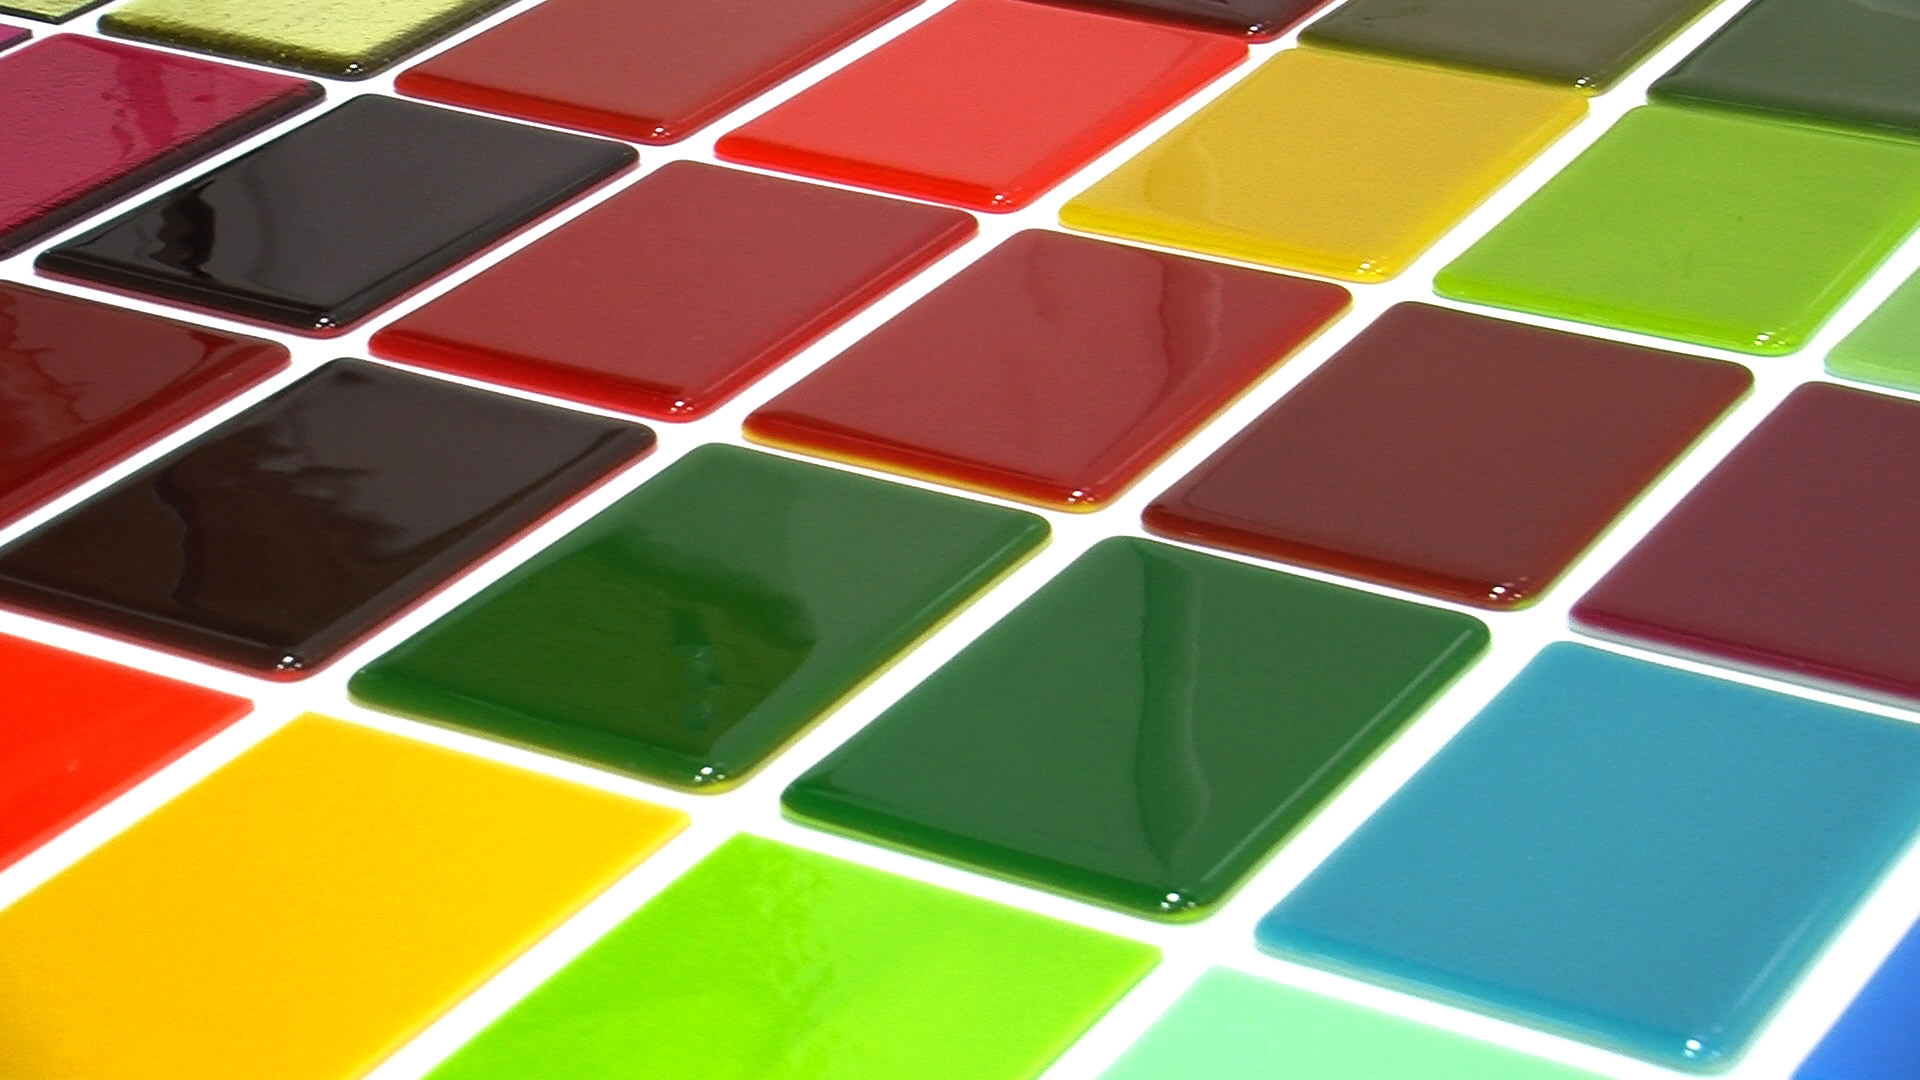 Expanding the Color Palette: Composite Colors - Bullseye Glass